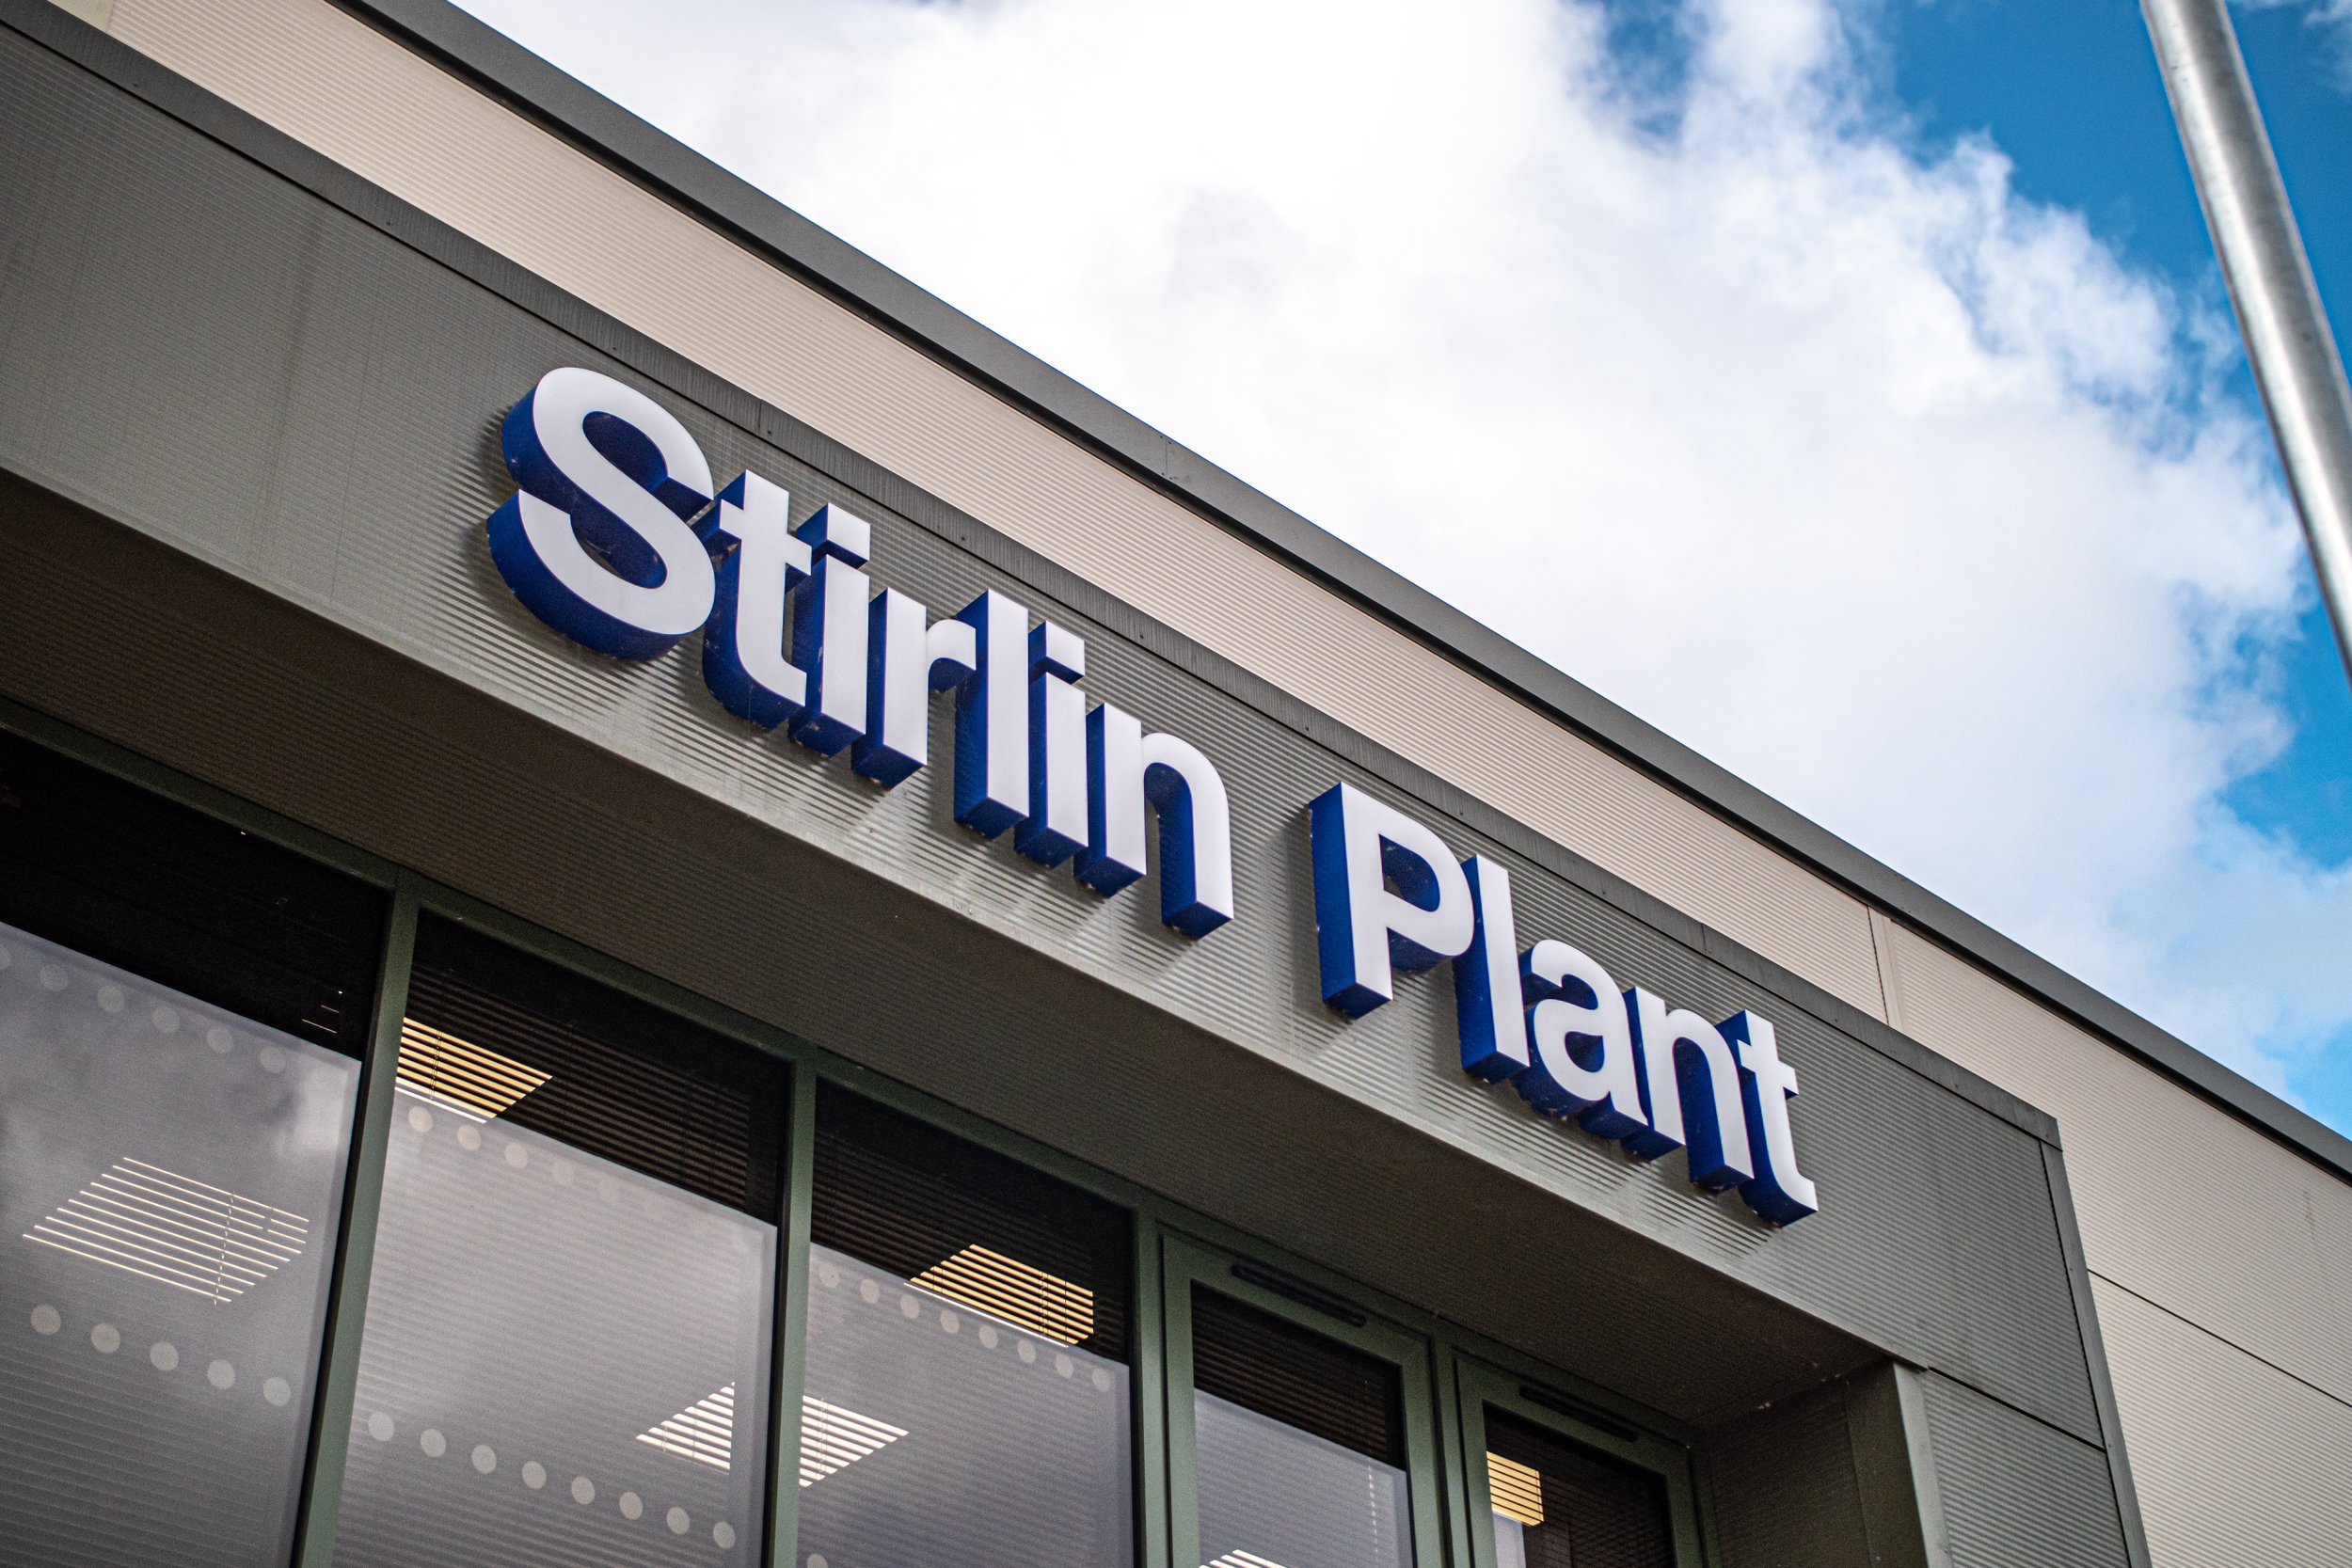 Stirlin Plant Photos (24 of 33).jpg